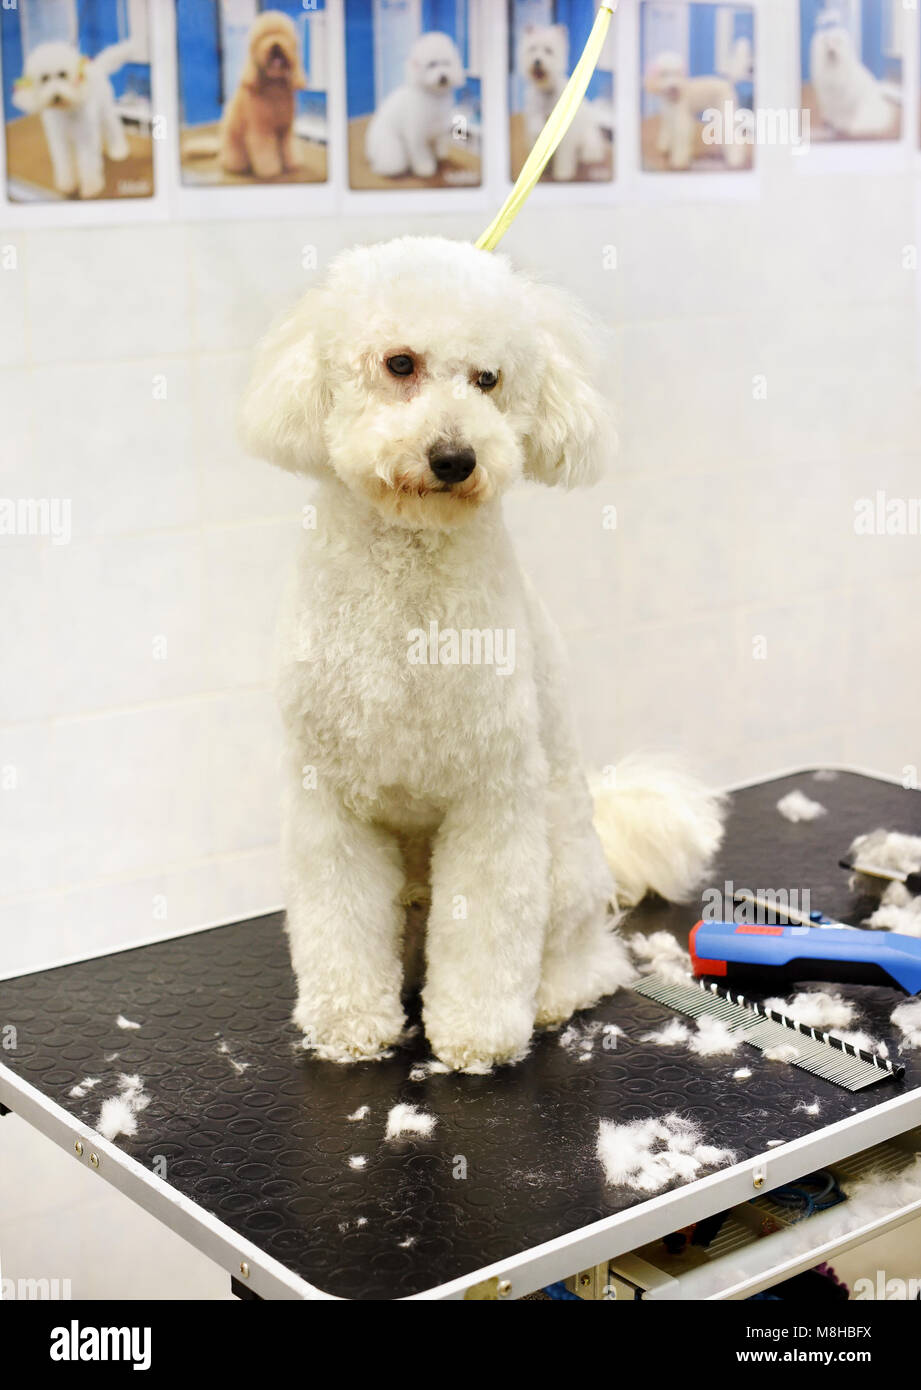 Hair salon poodle fotografías e imágenes de alta resolución - Alamy